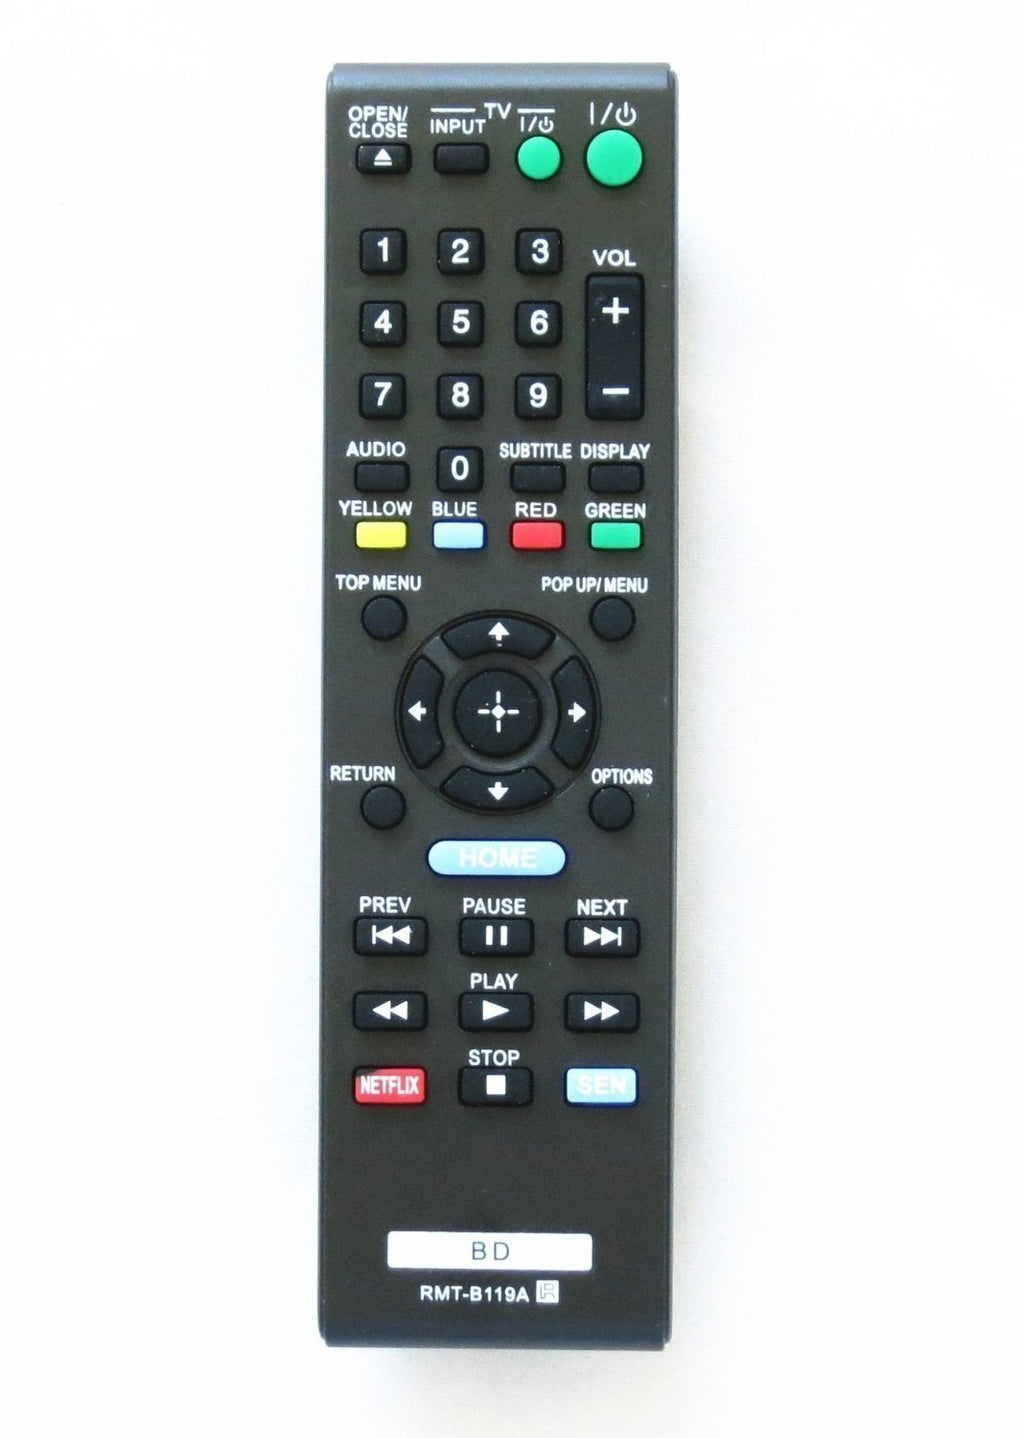 Nettech RMT-B119A Remote Control